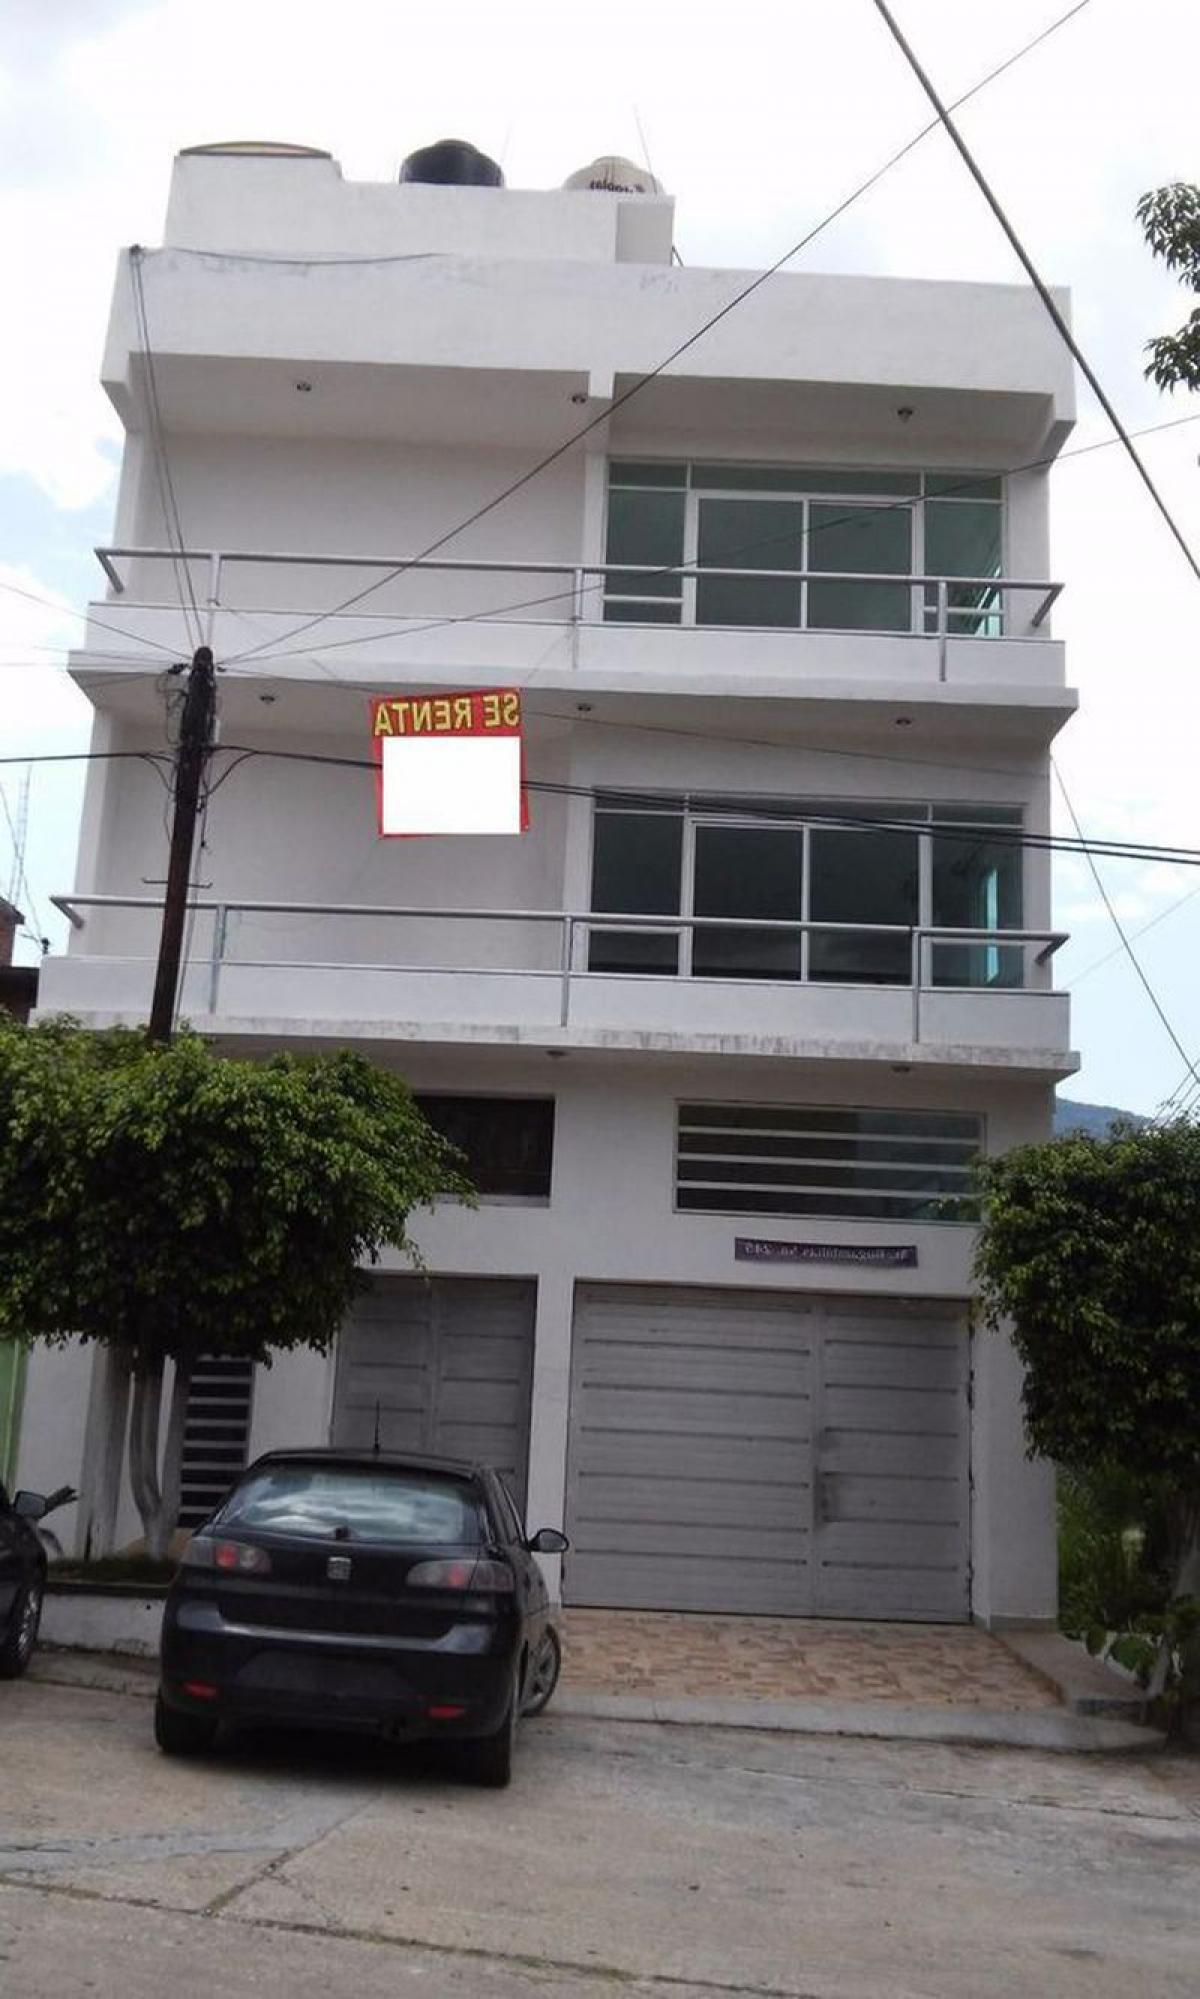 Picture of Apartment For Sale in Chiapas, Chiapas, Mexico